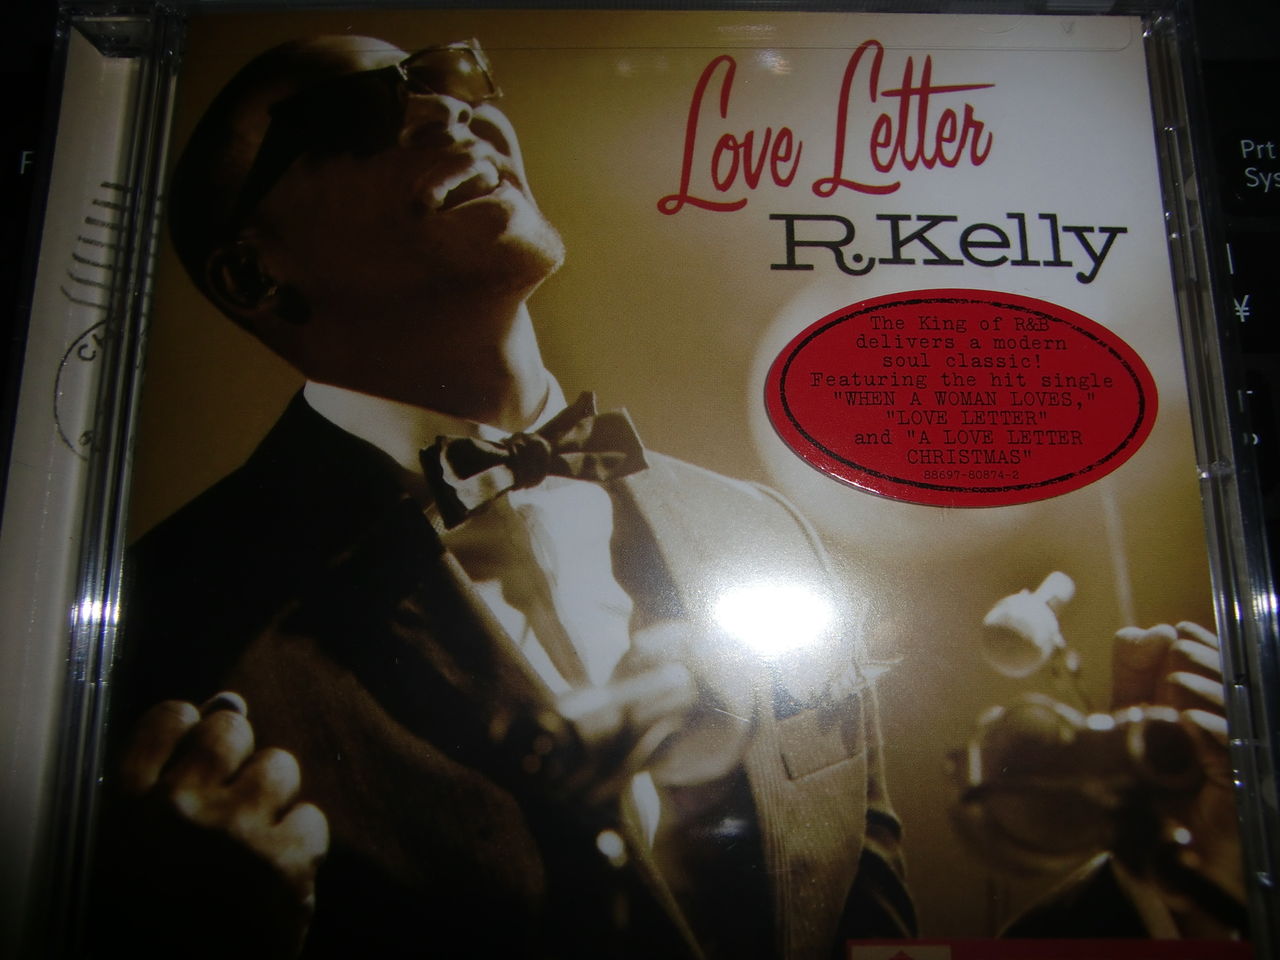 R. Kelly/Love Letter （Album Review） : Flavor Of R&B / HIPHOP